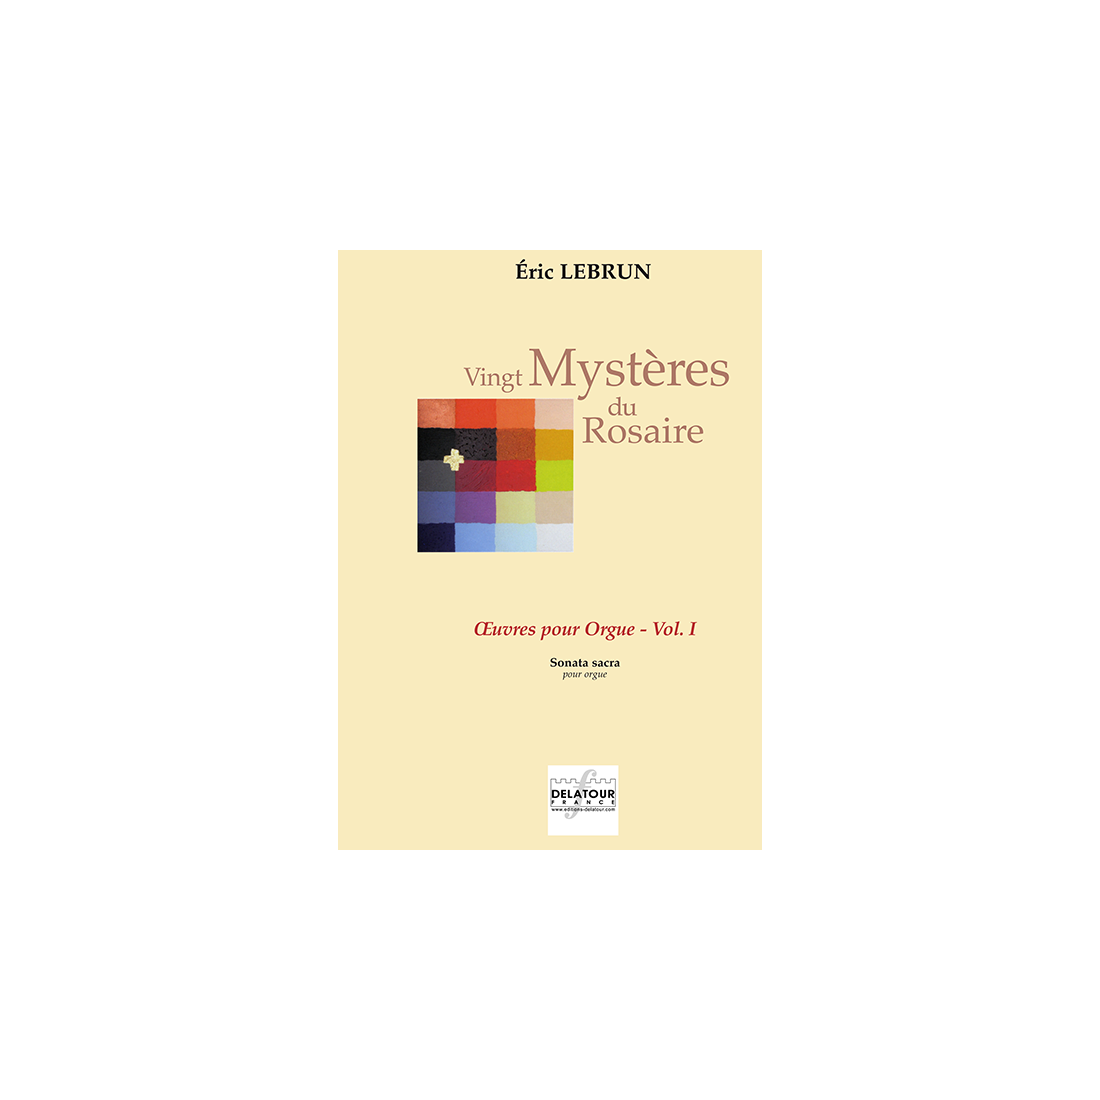 Vingt mystères du Rosaire - organ works Vol. 1